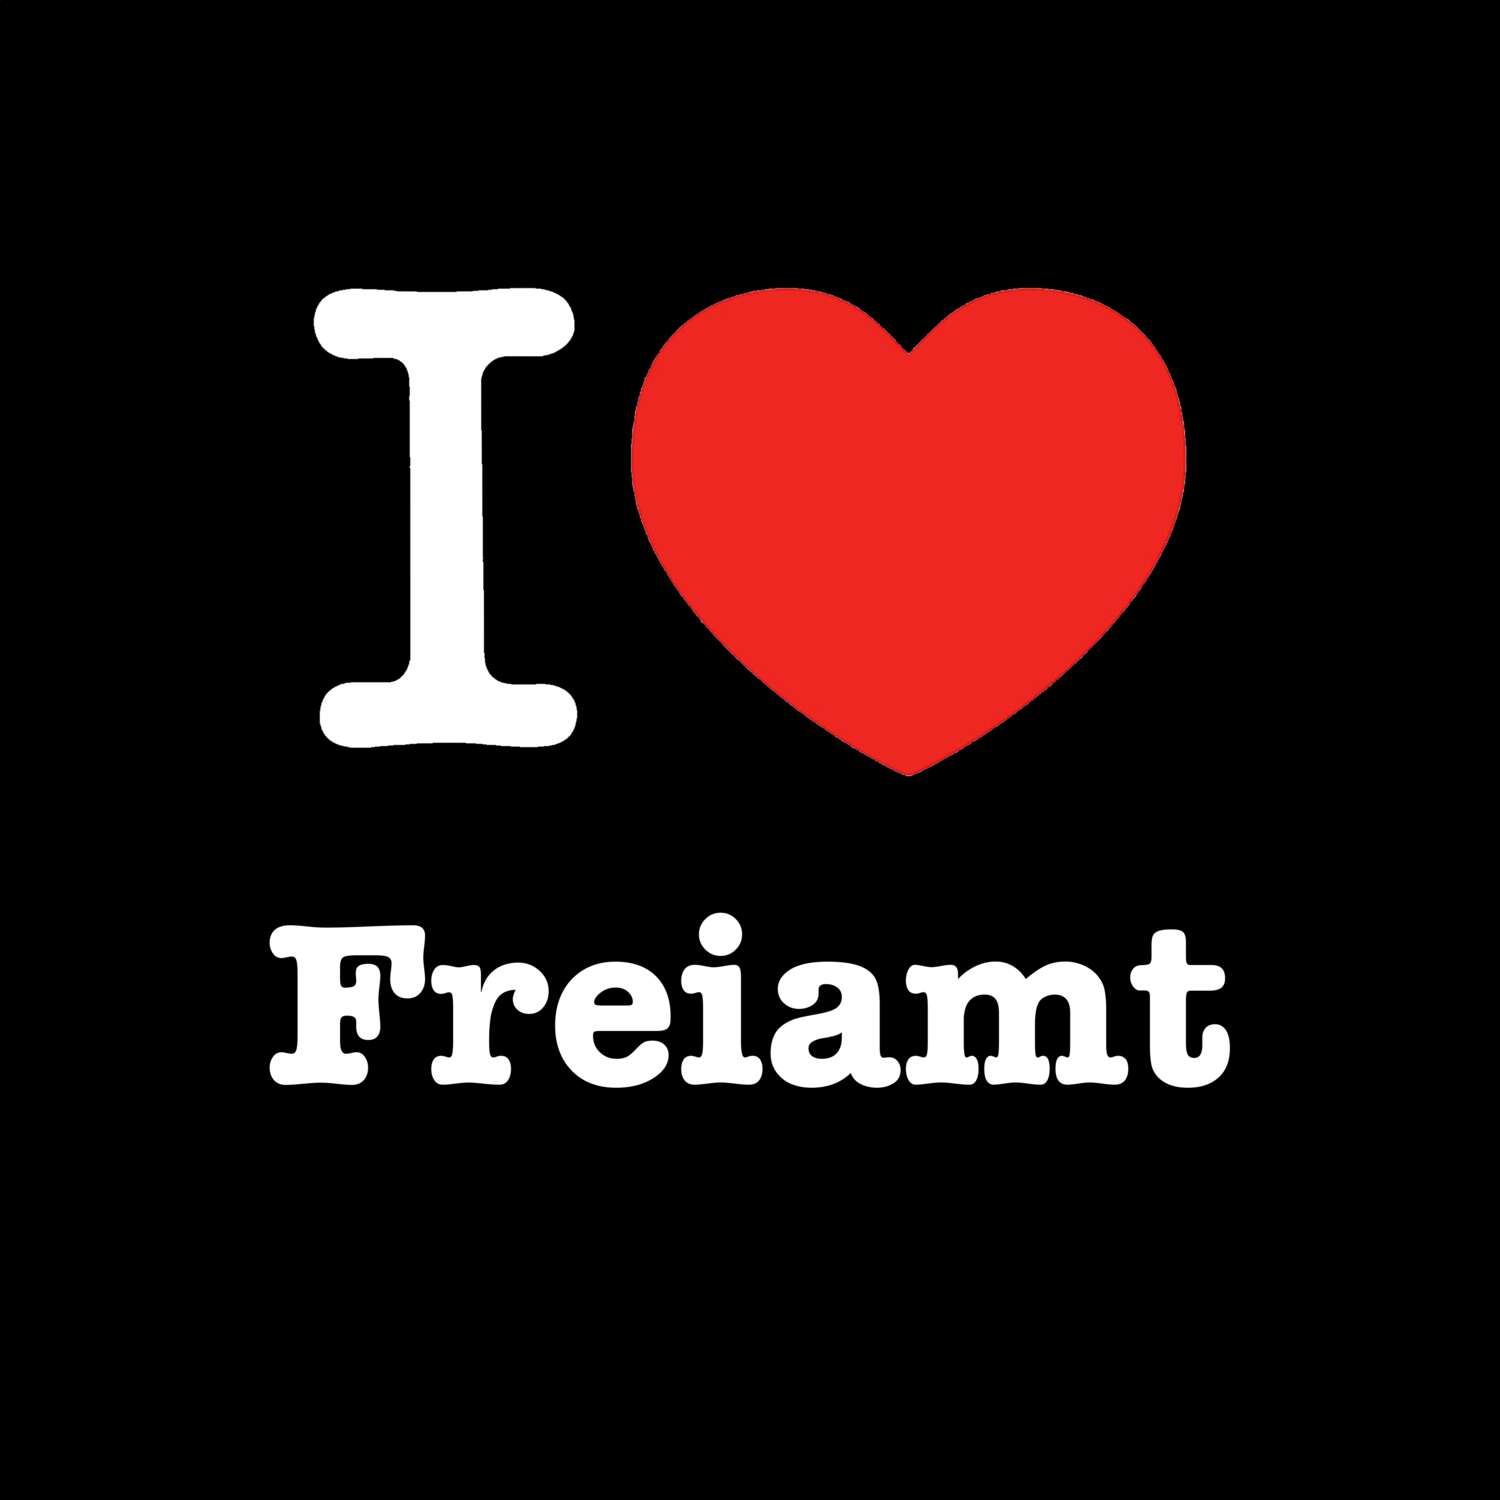 Freiamt T-Shirt »I love«